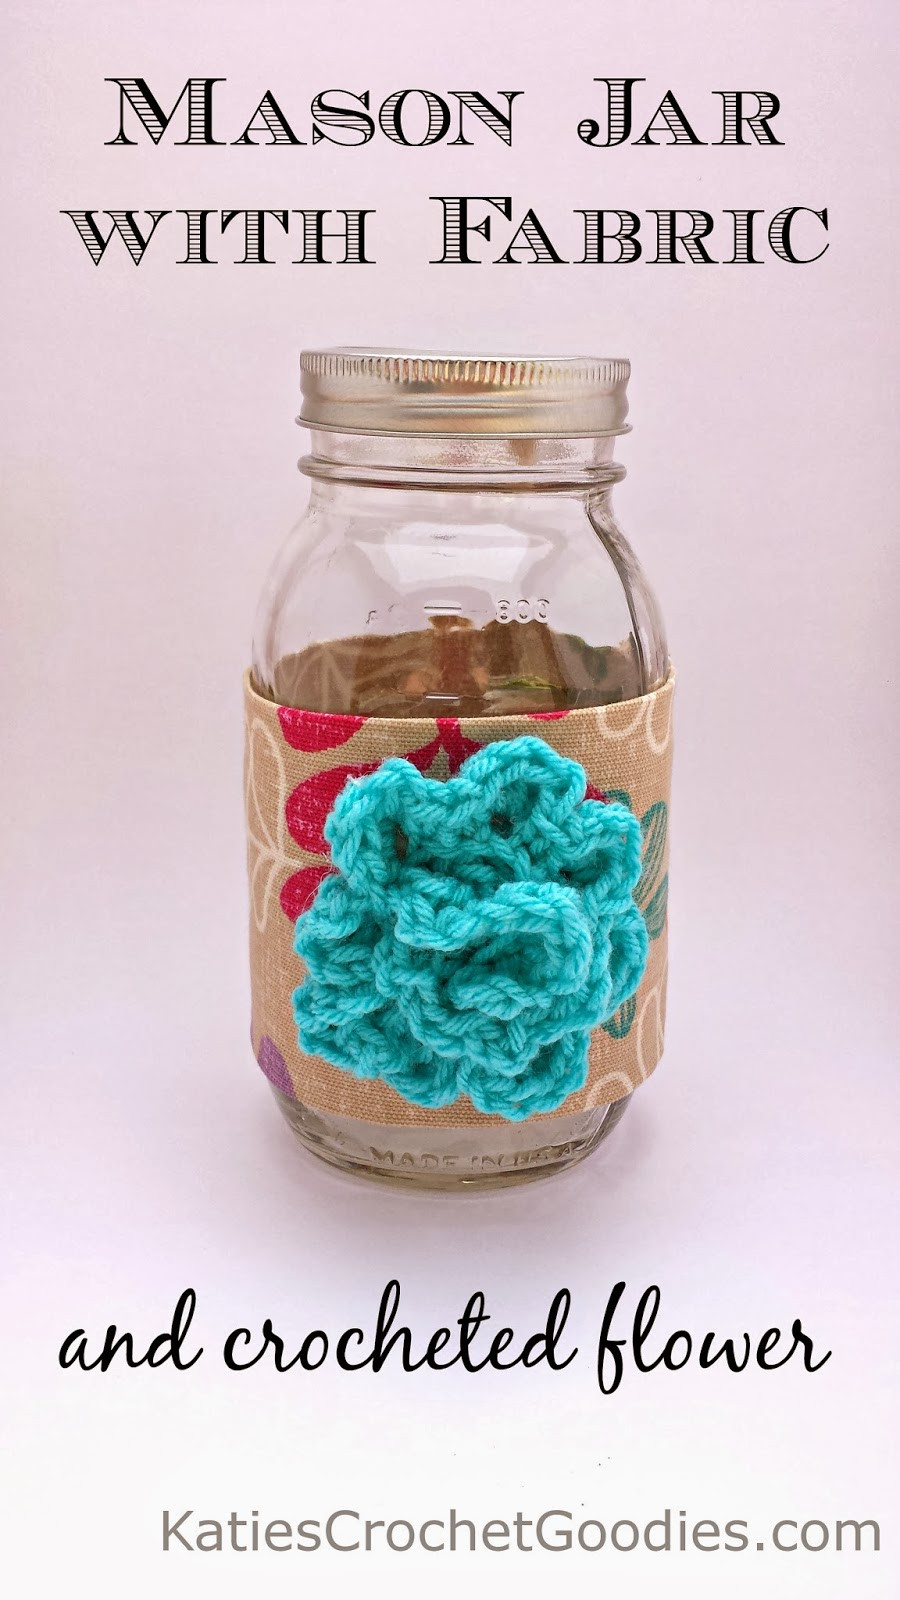 Best ideas about DIY Mason Jar Crafts
. Save or Pin DIY Mason Jar Craft Katie s Crochet Goo s Now.